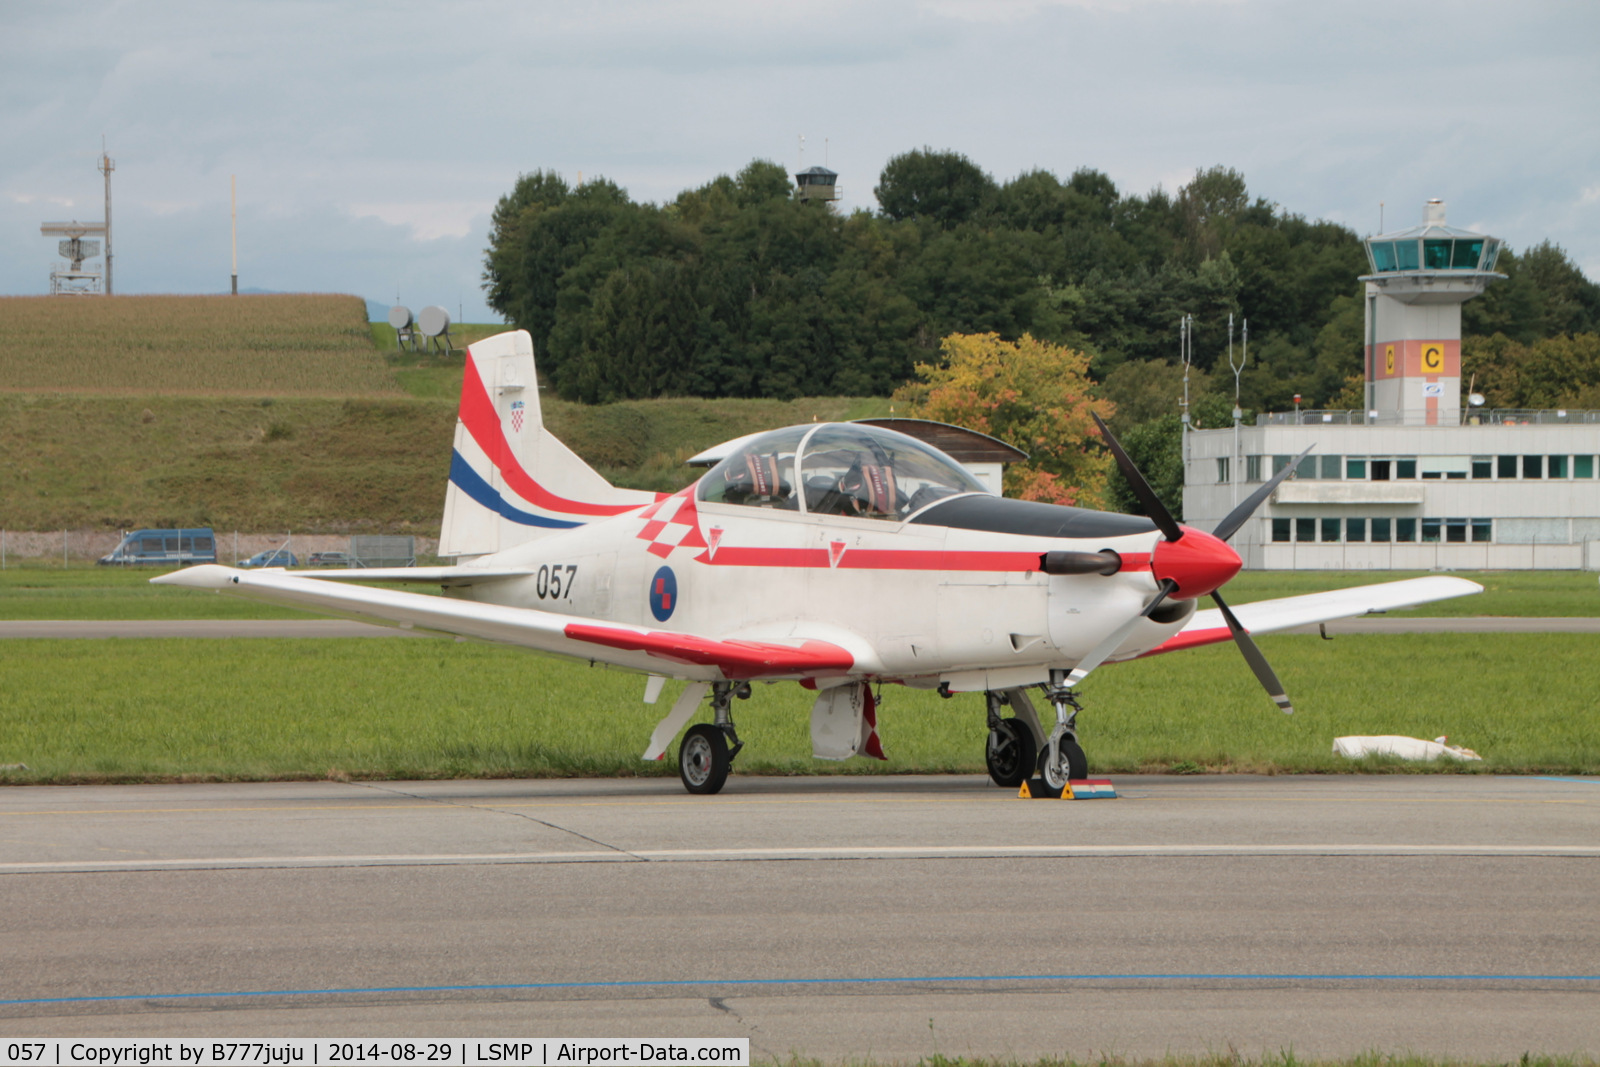 057, Pilatus PC-9M C/N 620, at AIR14